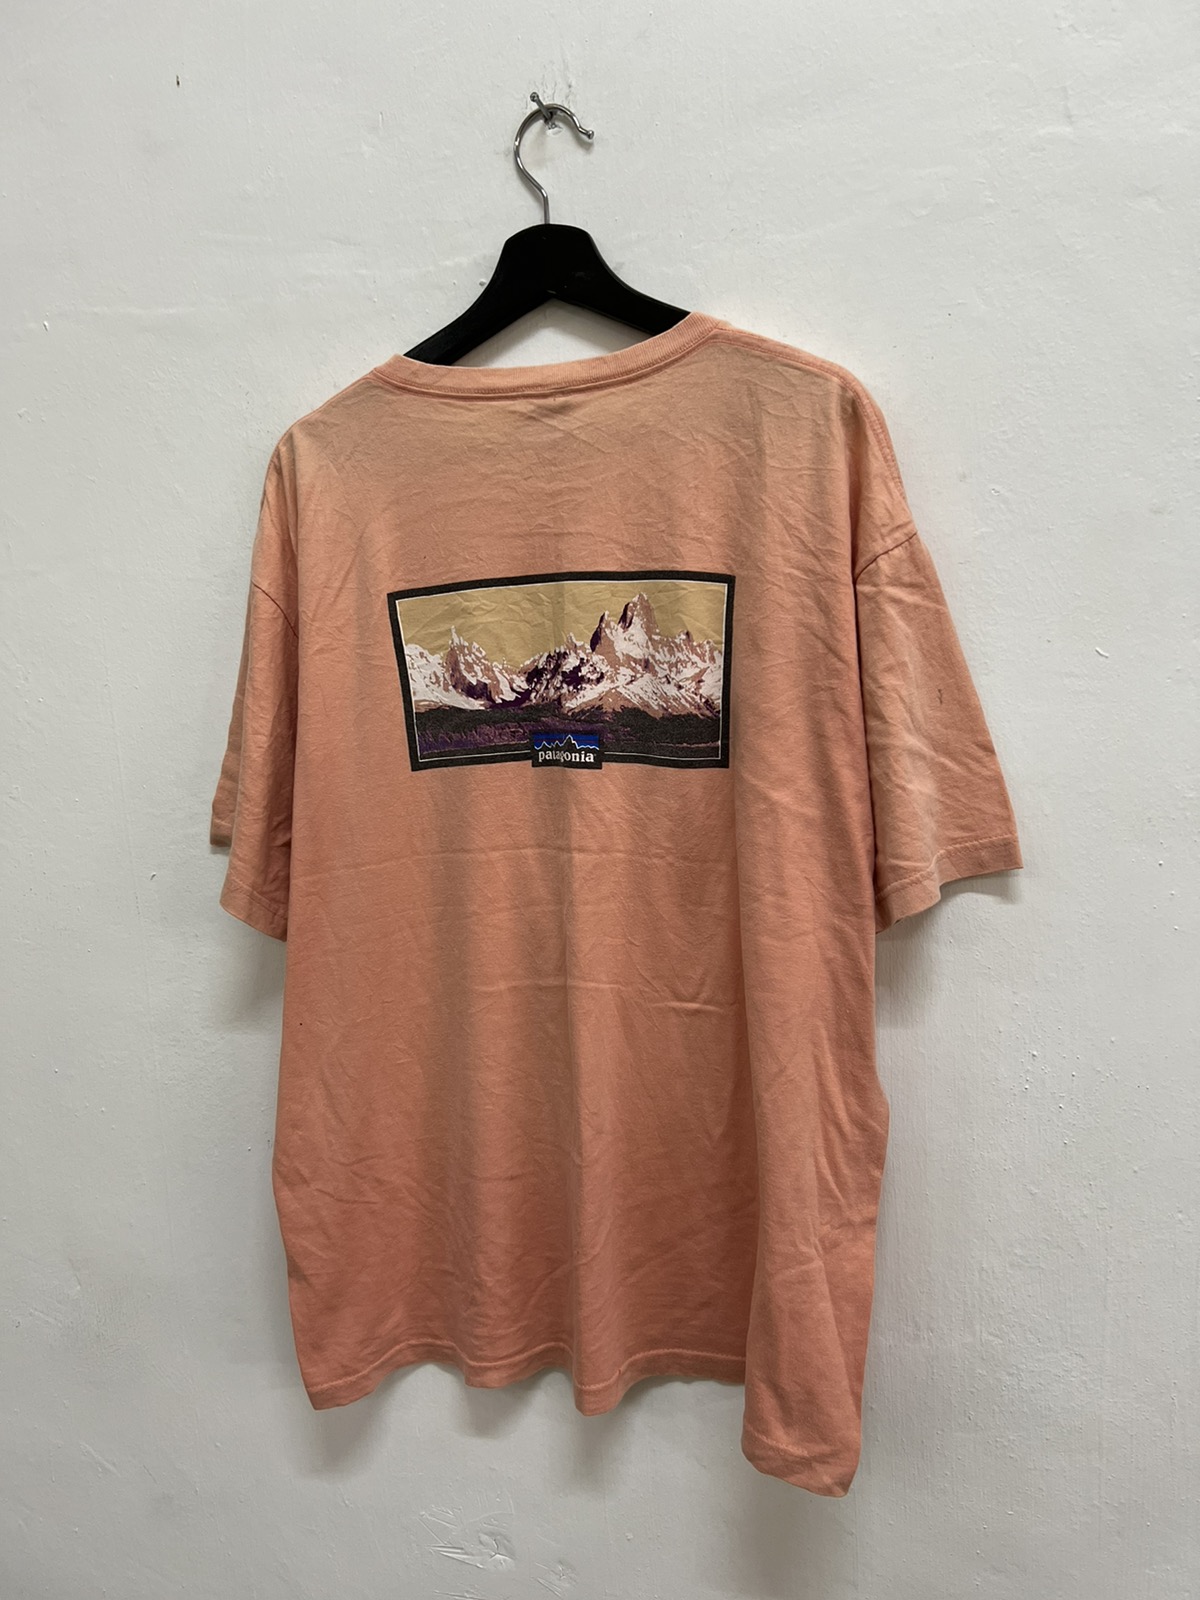 🔥STEAL🔥 Patagonia Tee Shirt - 5